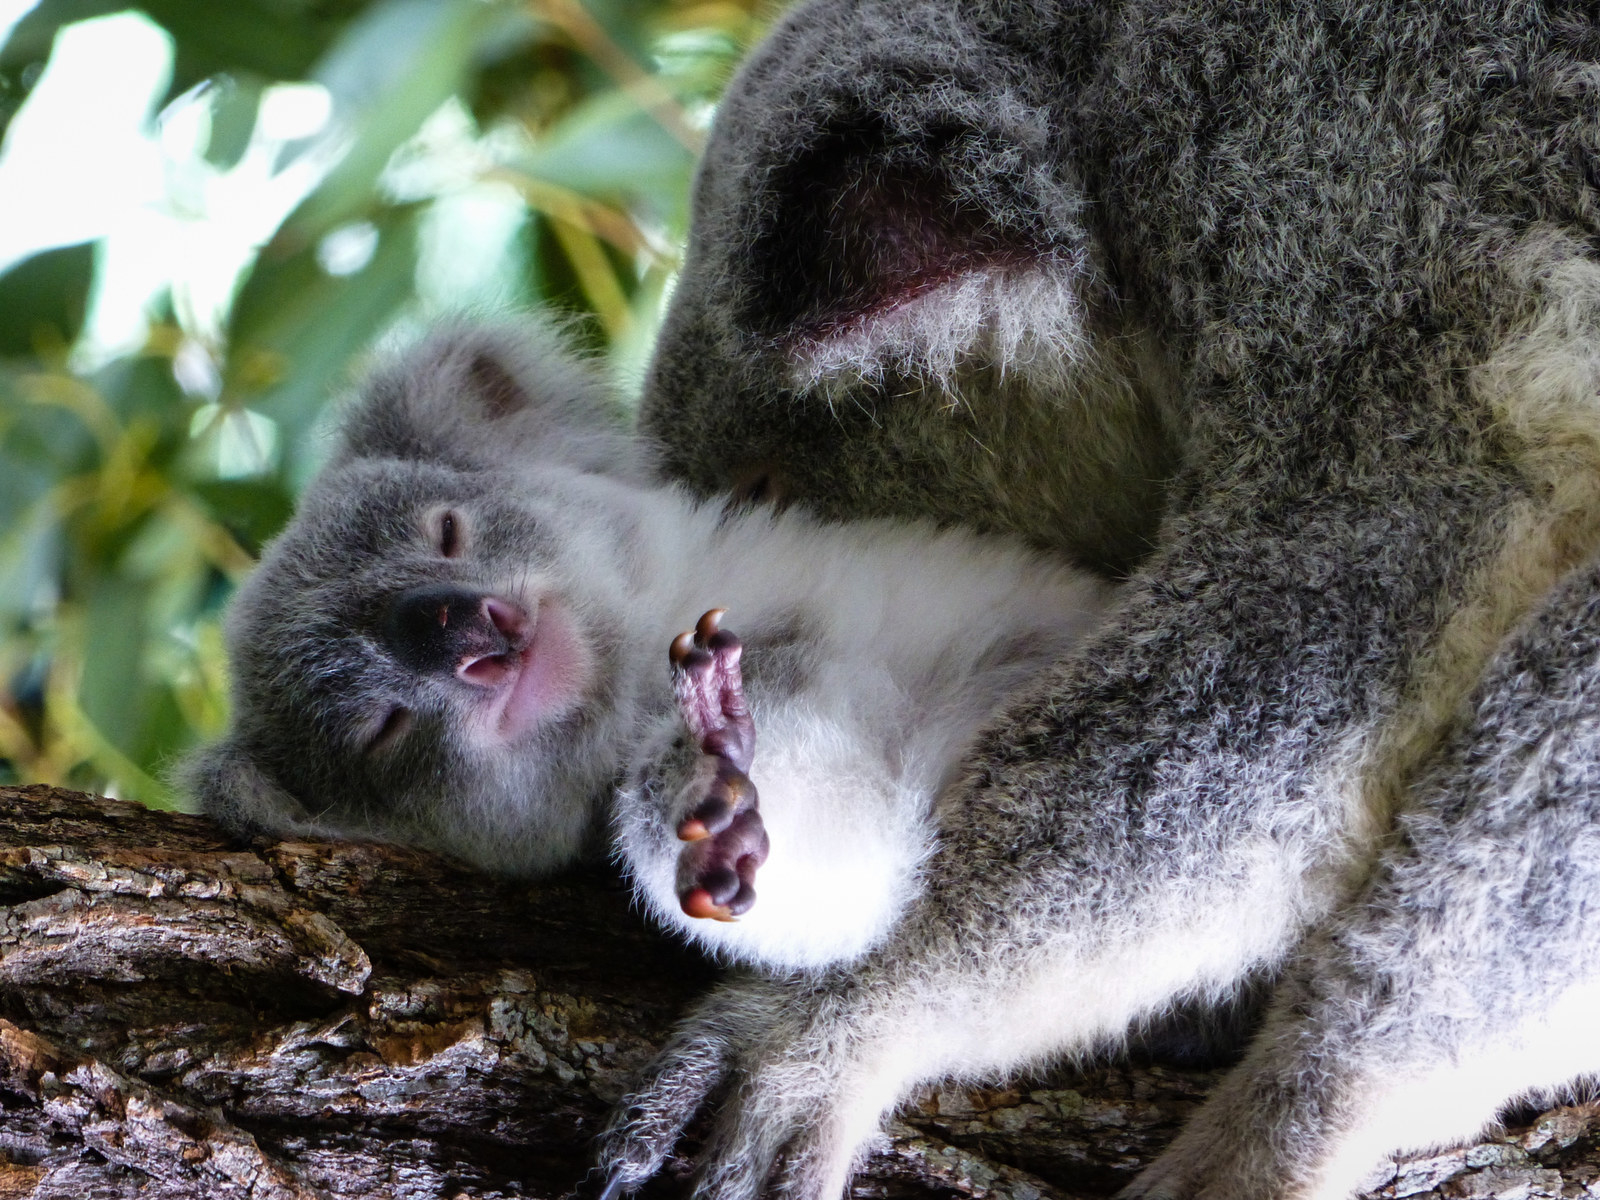 A baby koala bear asleep in a tree